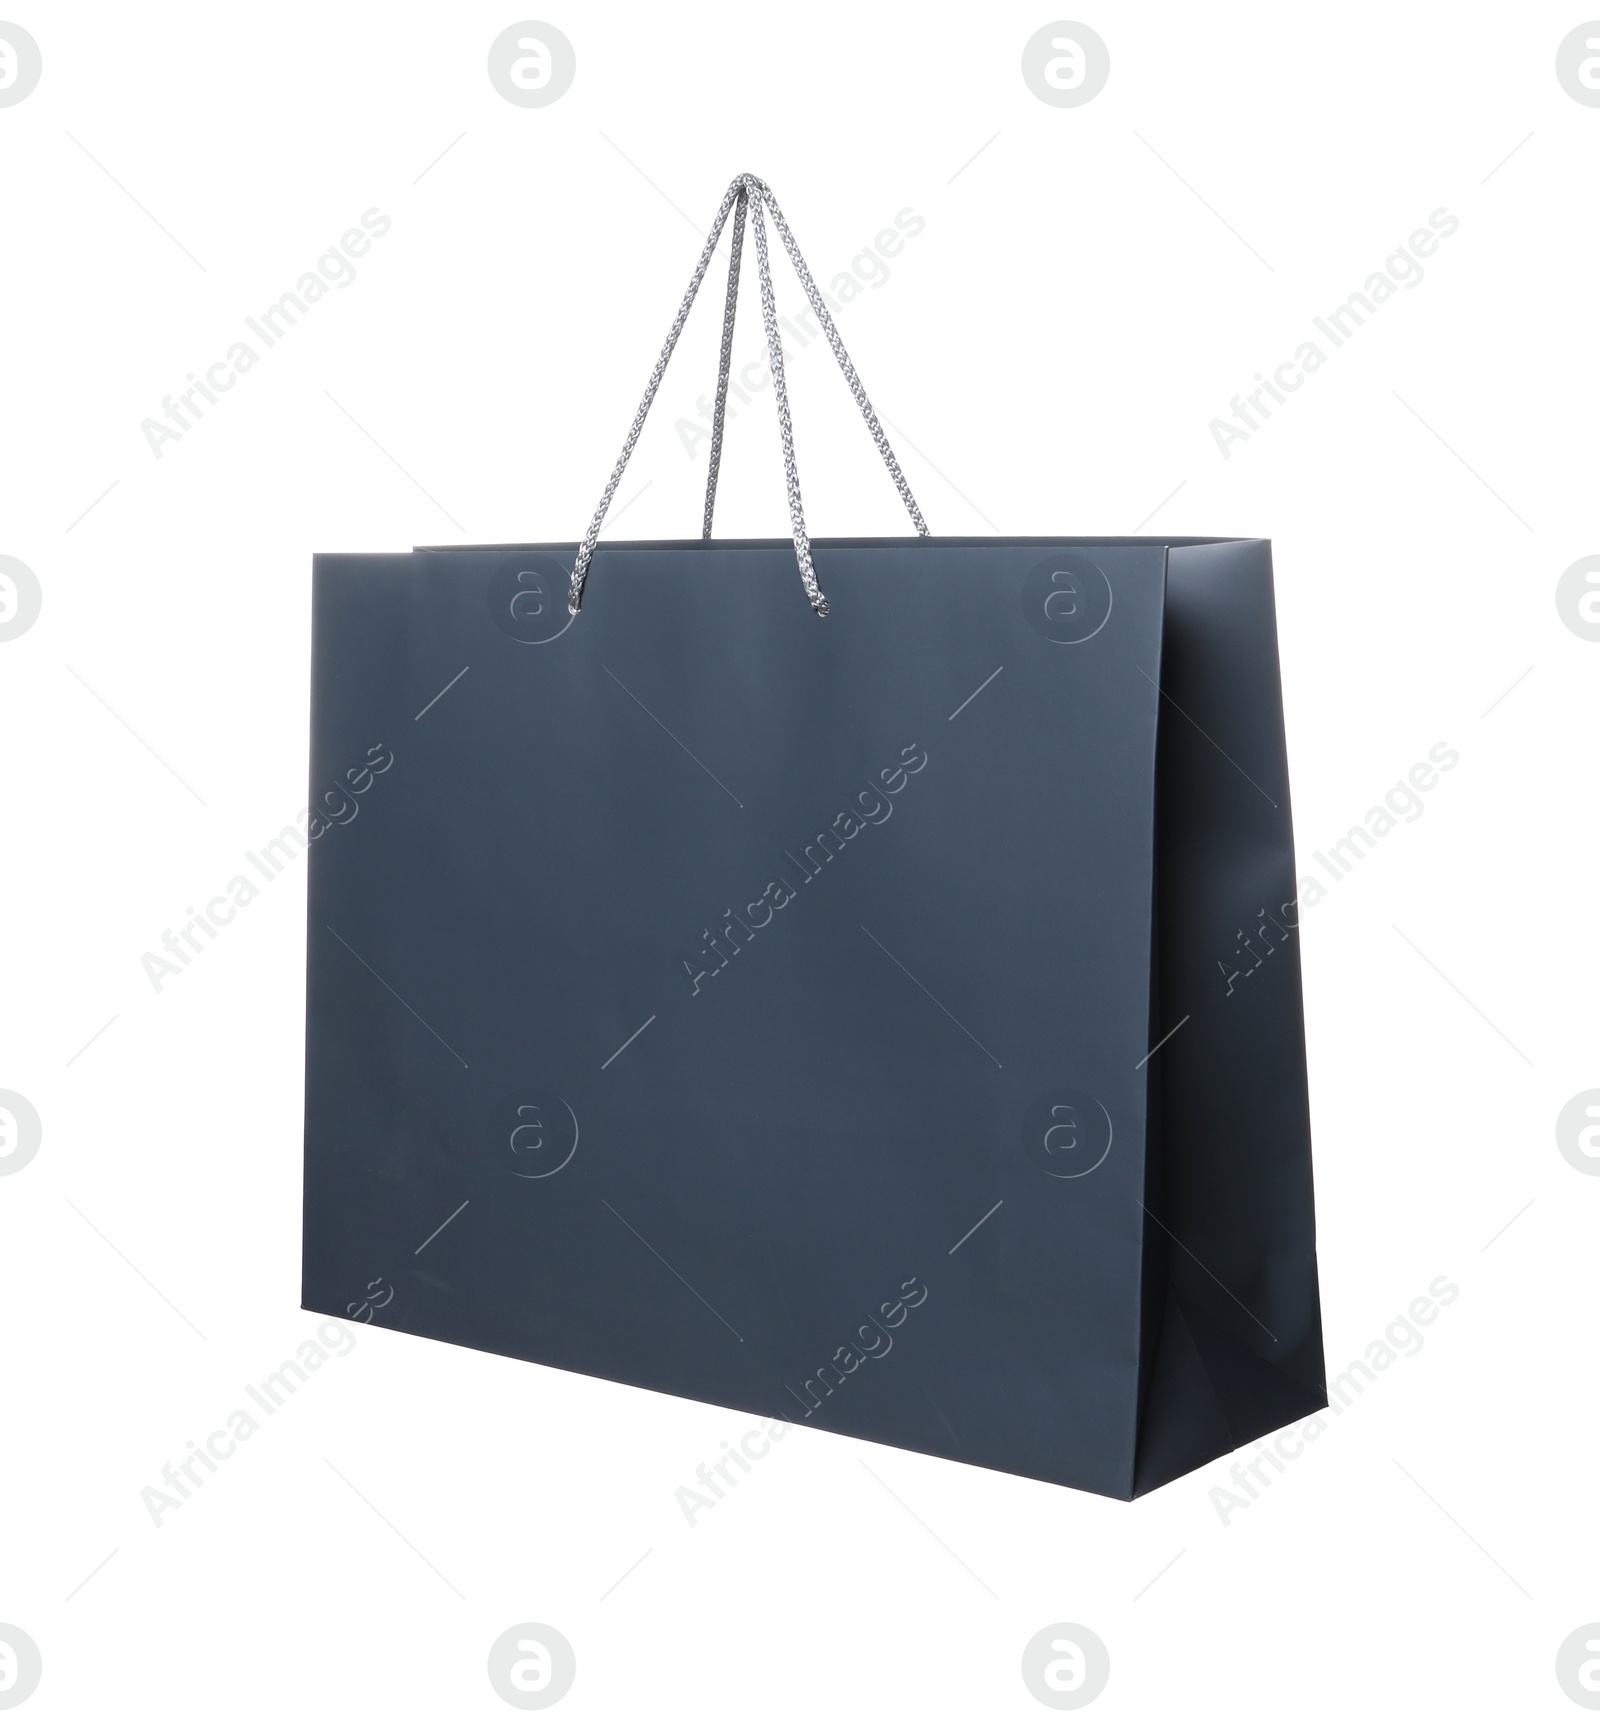 Photo of One black shopping bag isolated on white